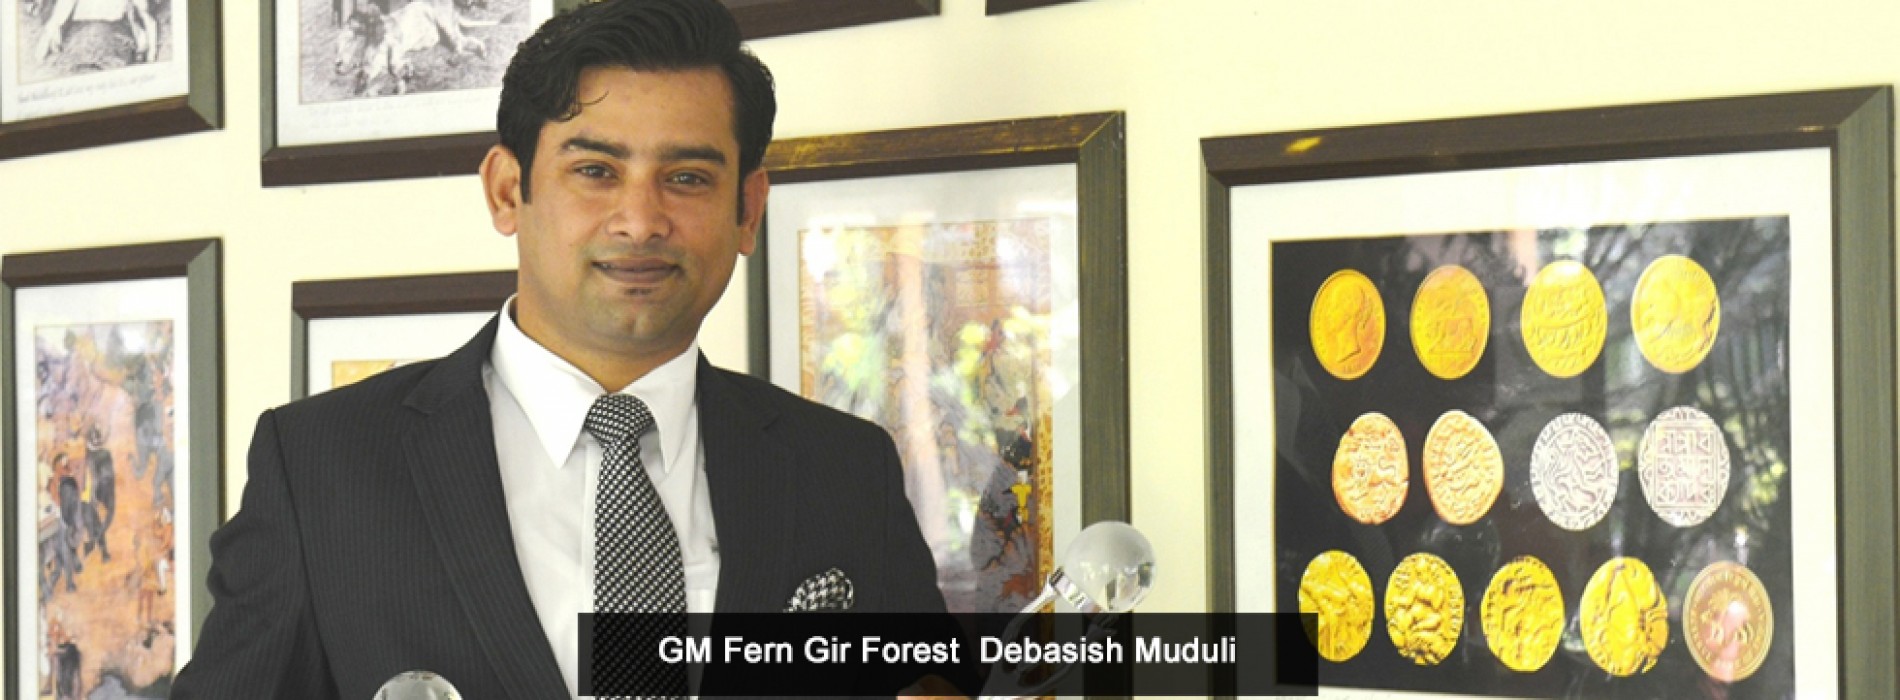 Gujarat Tourism declares The Fern Gir Forest Resort as “The Best Resort of Gujarat”